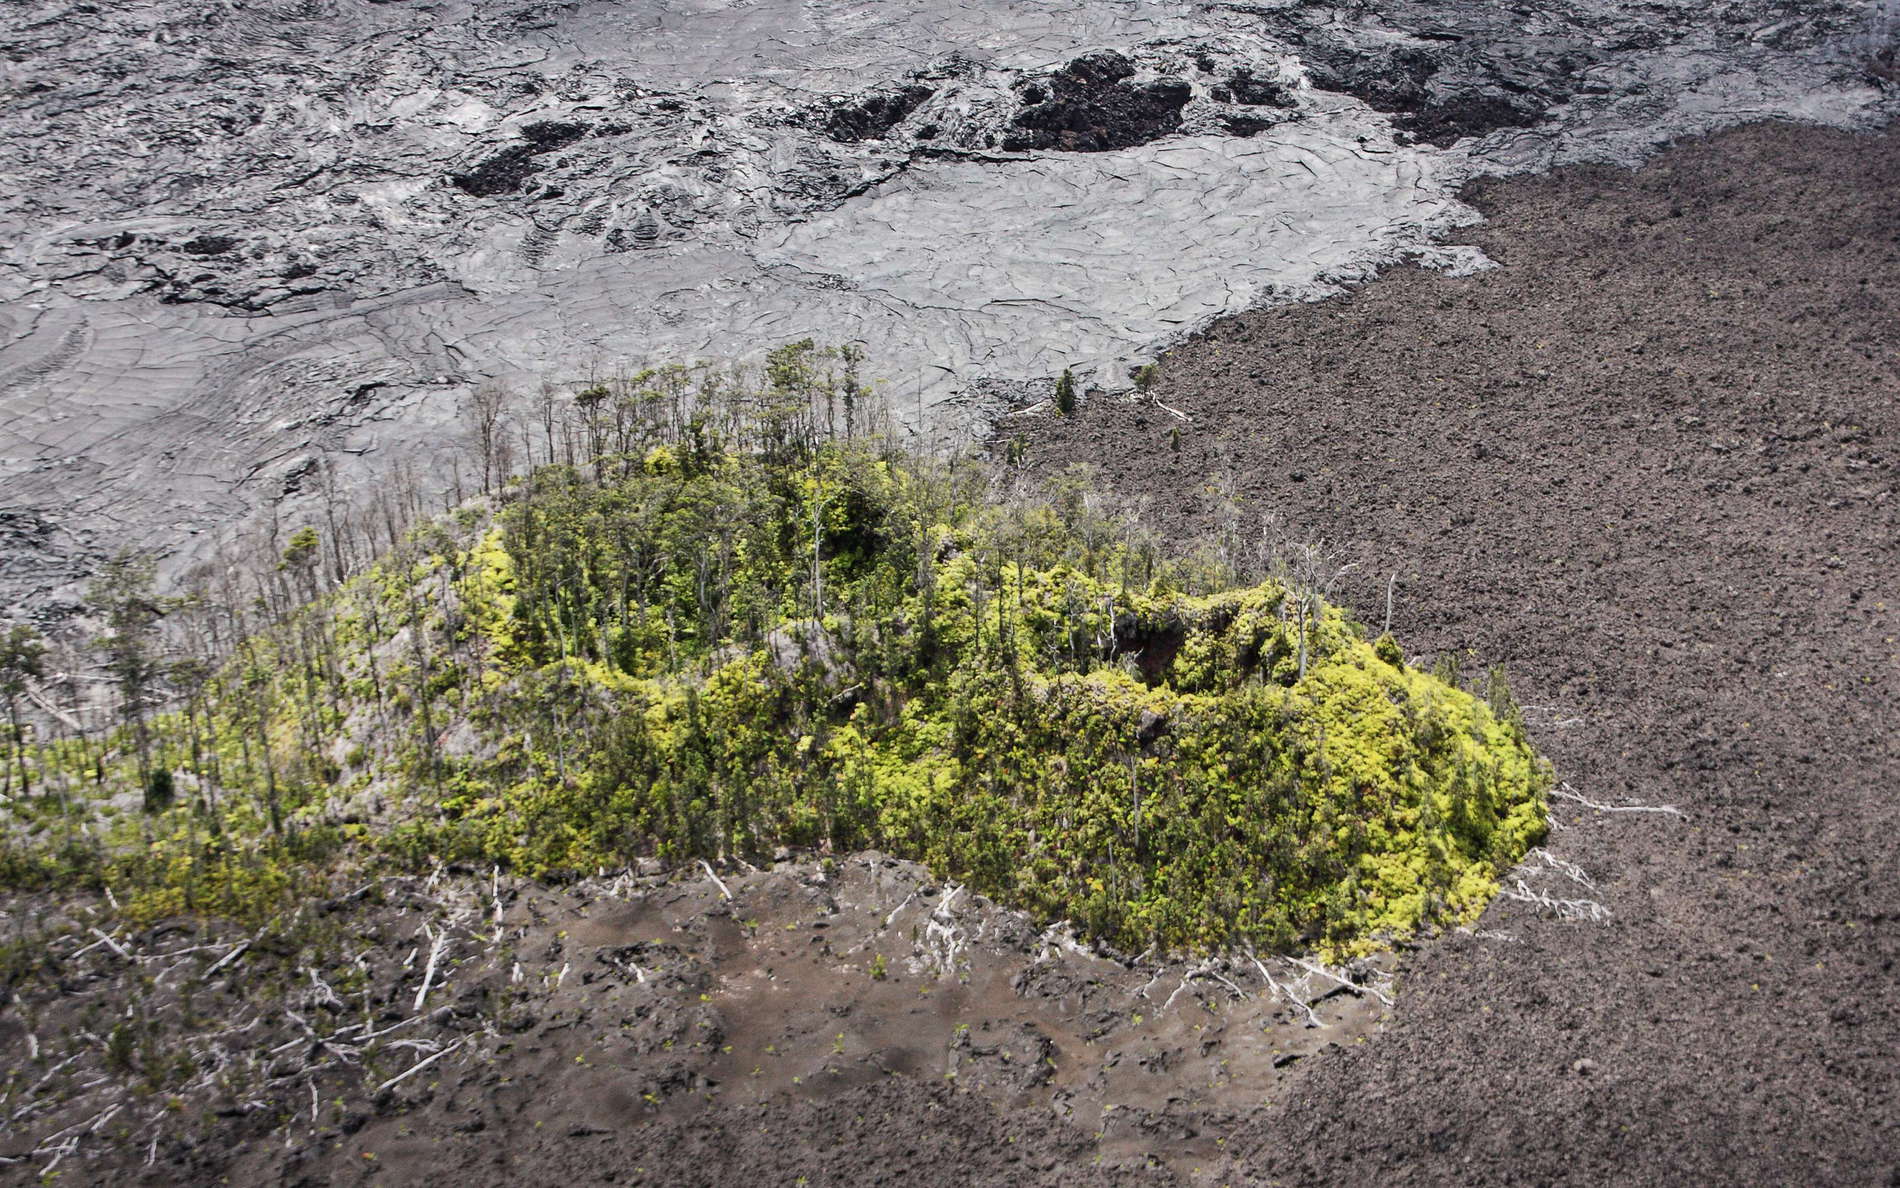 East Rift Zone  |  Island in lava flows